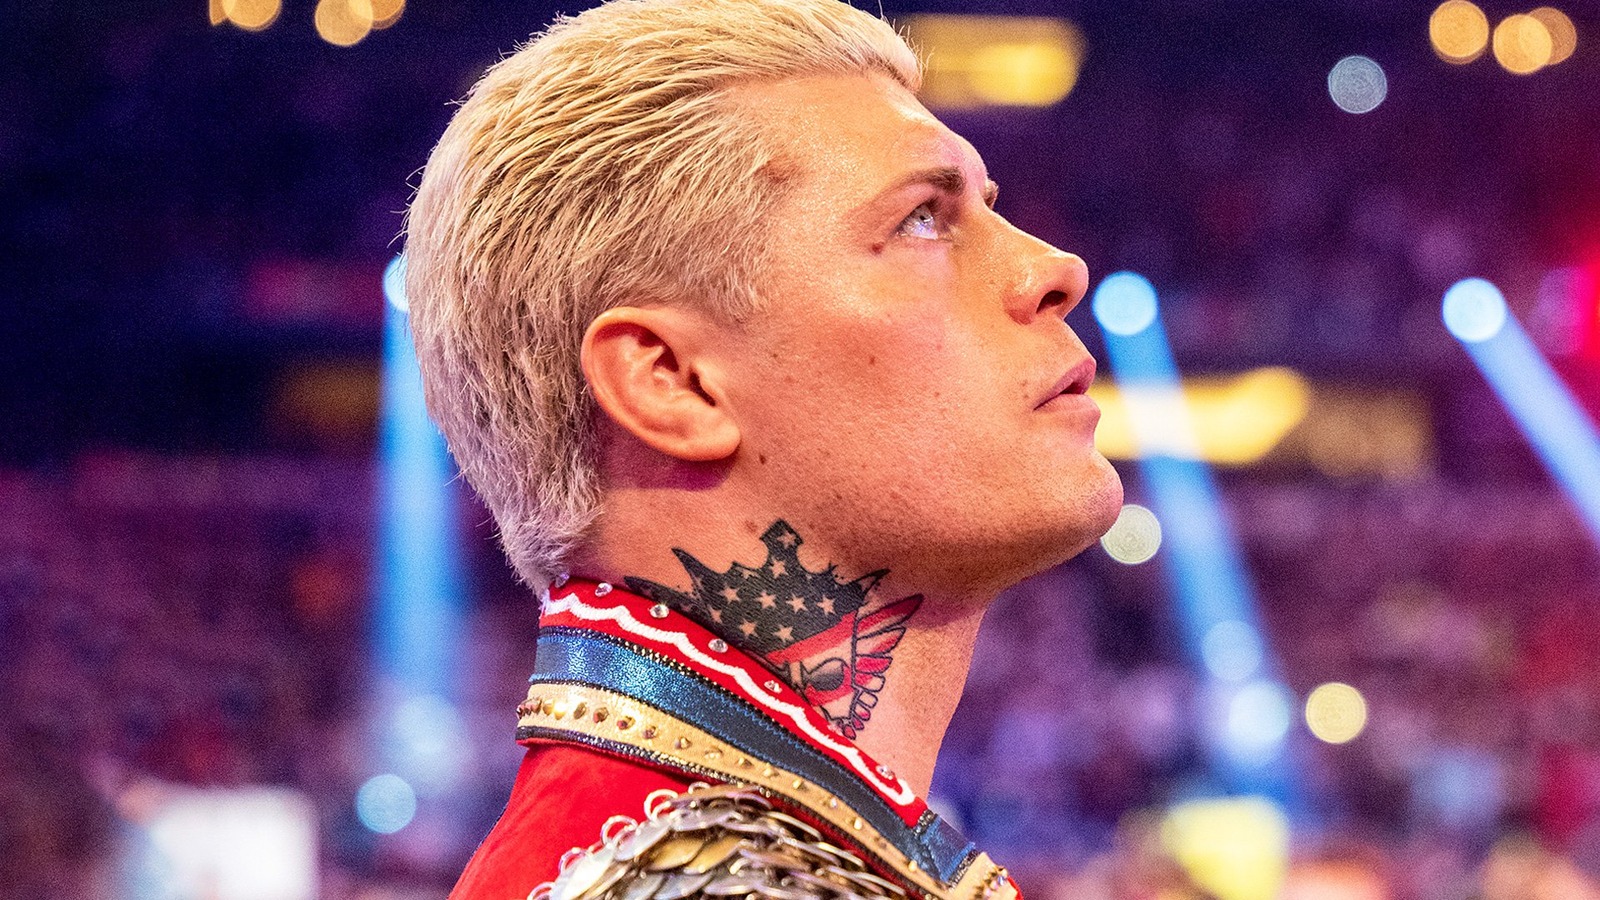 Court Bauer comenta sobre cómo WWE está tratando a Cody Rhodes, dice que Dusty estaría orgulloso